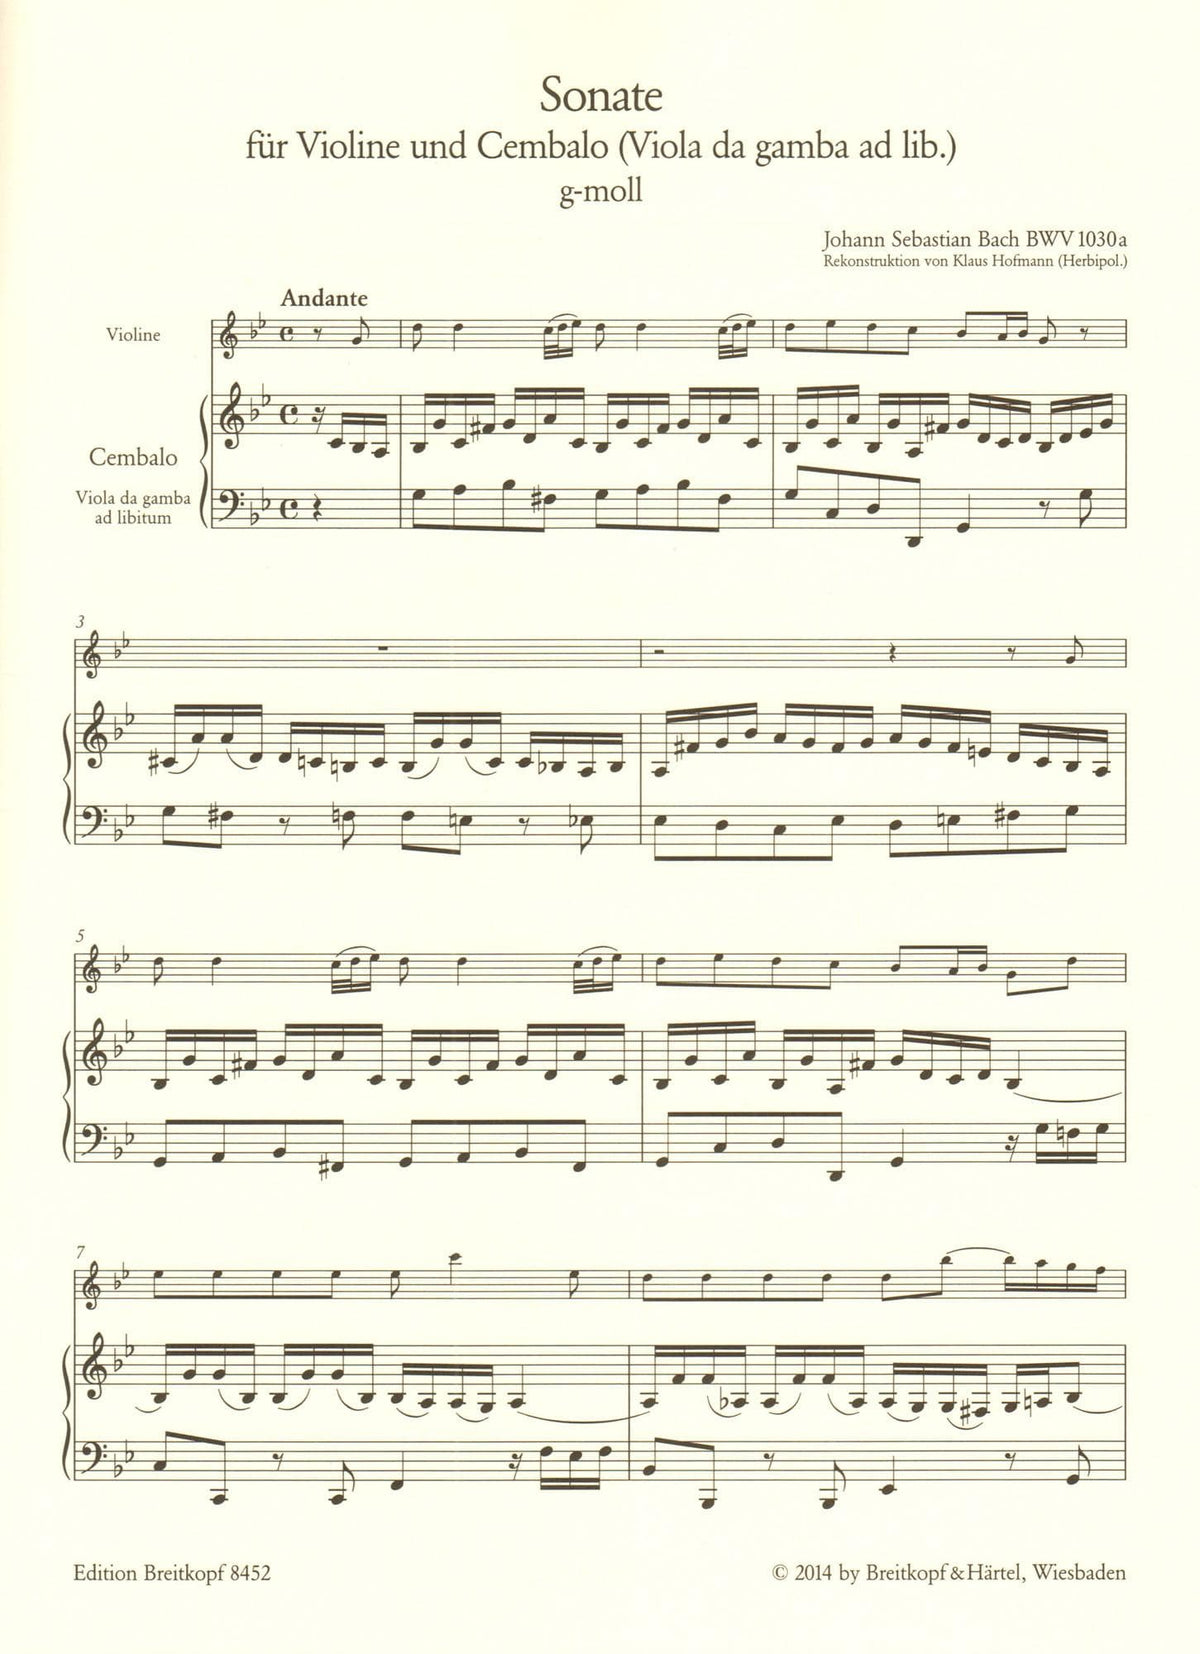 Bach, J.S. - Sonata for Violin and Cembalo in G Minor - optional Viola da gamba part - BWV 1030a - Edition Breitkopf